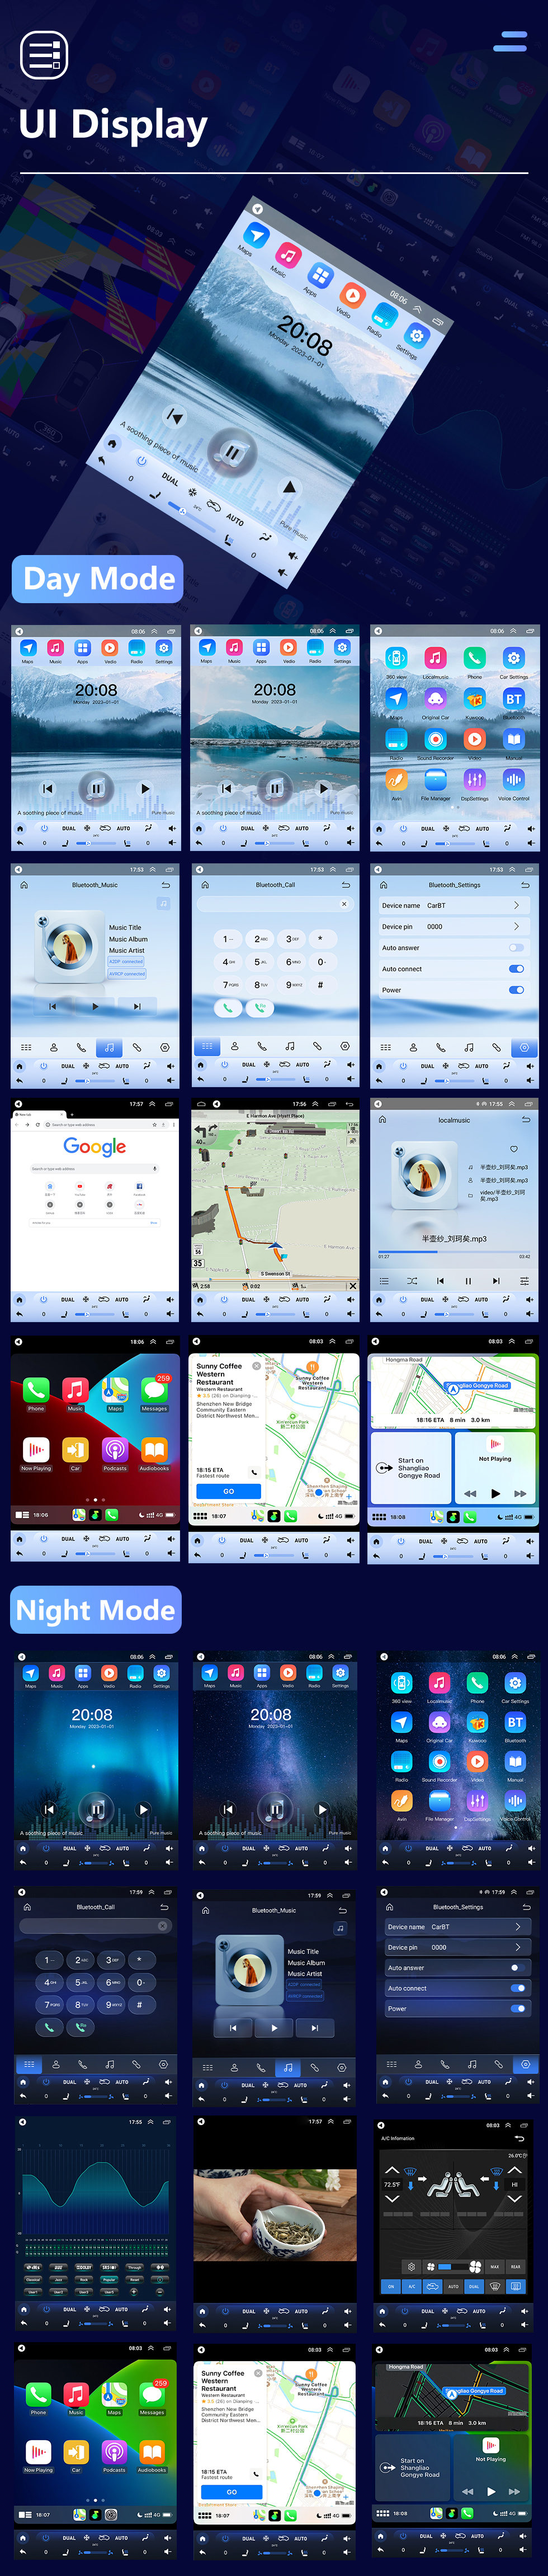 Seicane 9.7 pulgadas Android 10.0 2005-2010 Nissan Tiida Radio de navegación GPS con pantalla táctil Bluetooth AUX WIFI Soporte de música OBD2 DVR Carplay Mirror Link